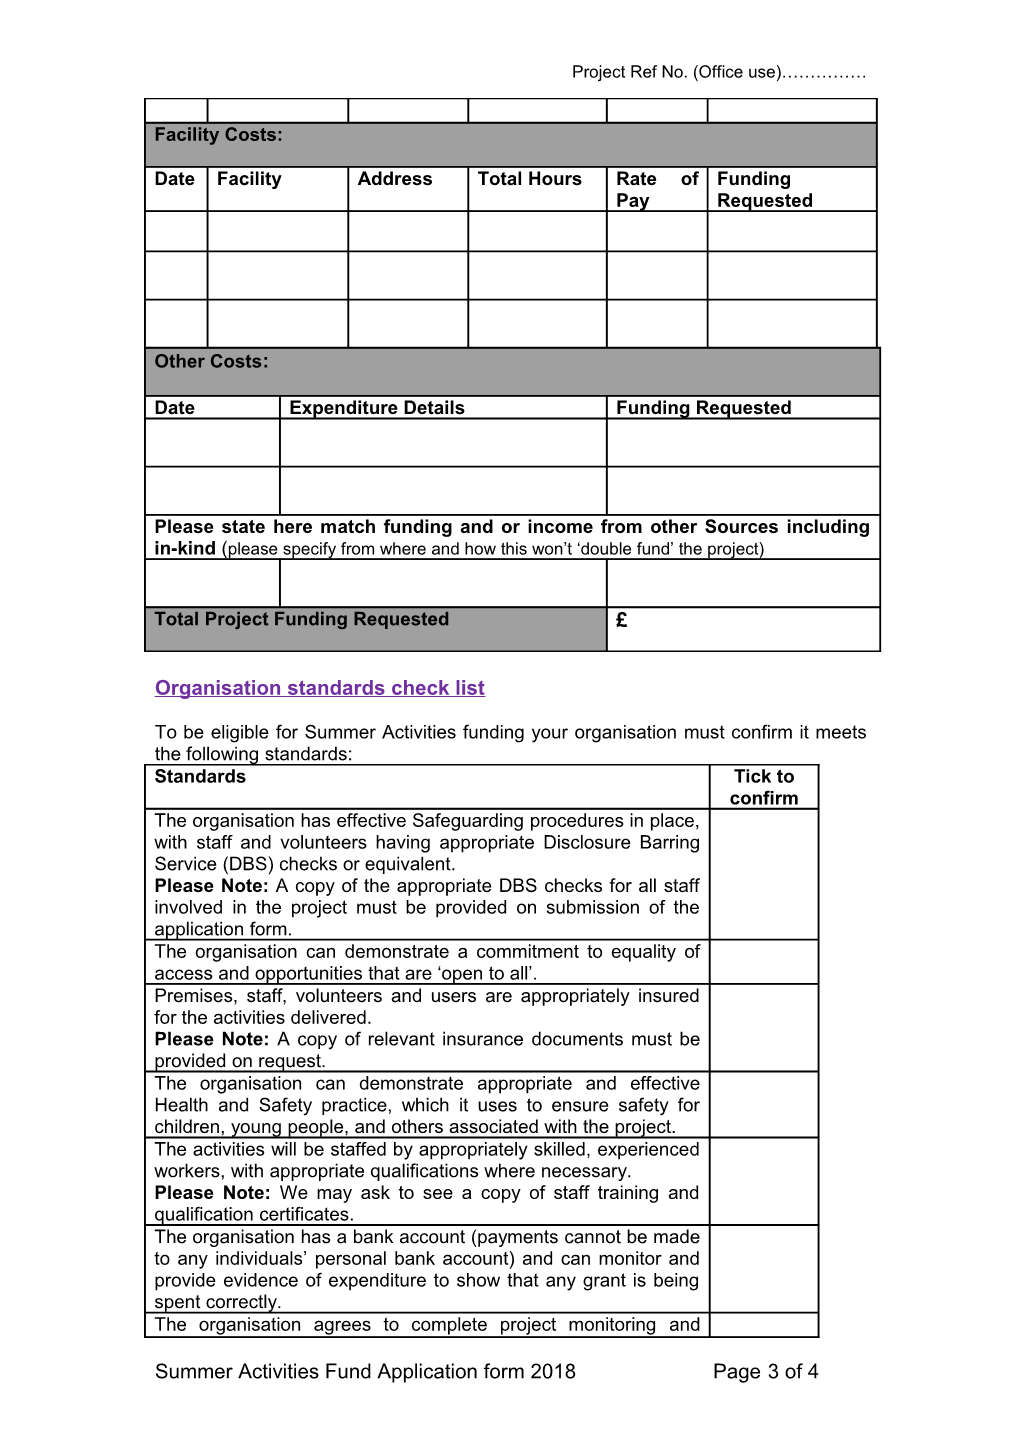 Summer Activities Application Form 2013